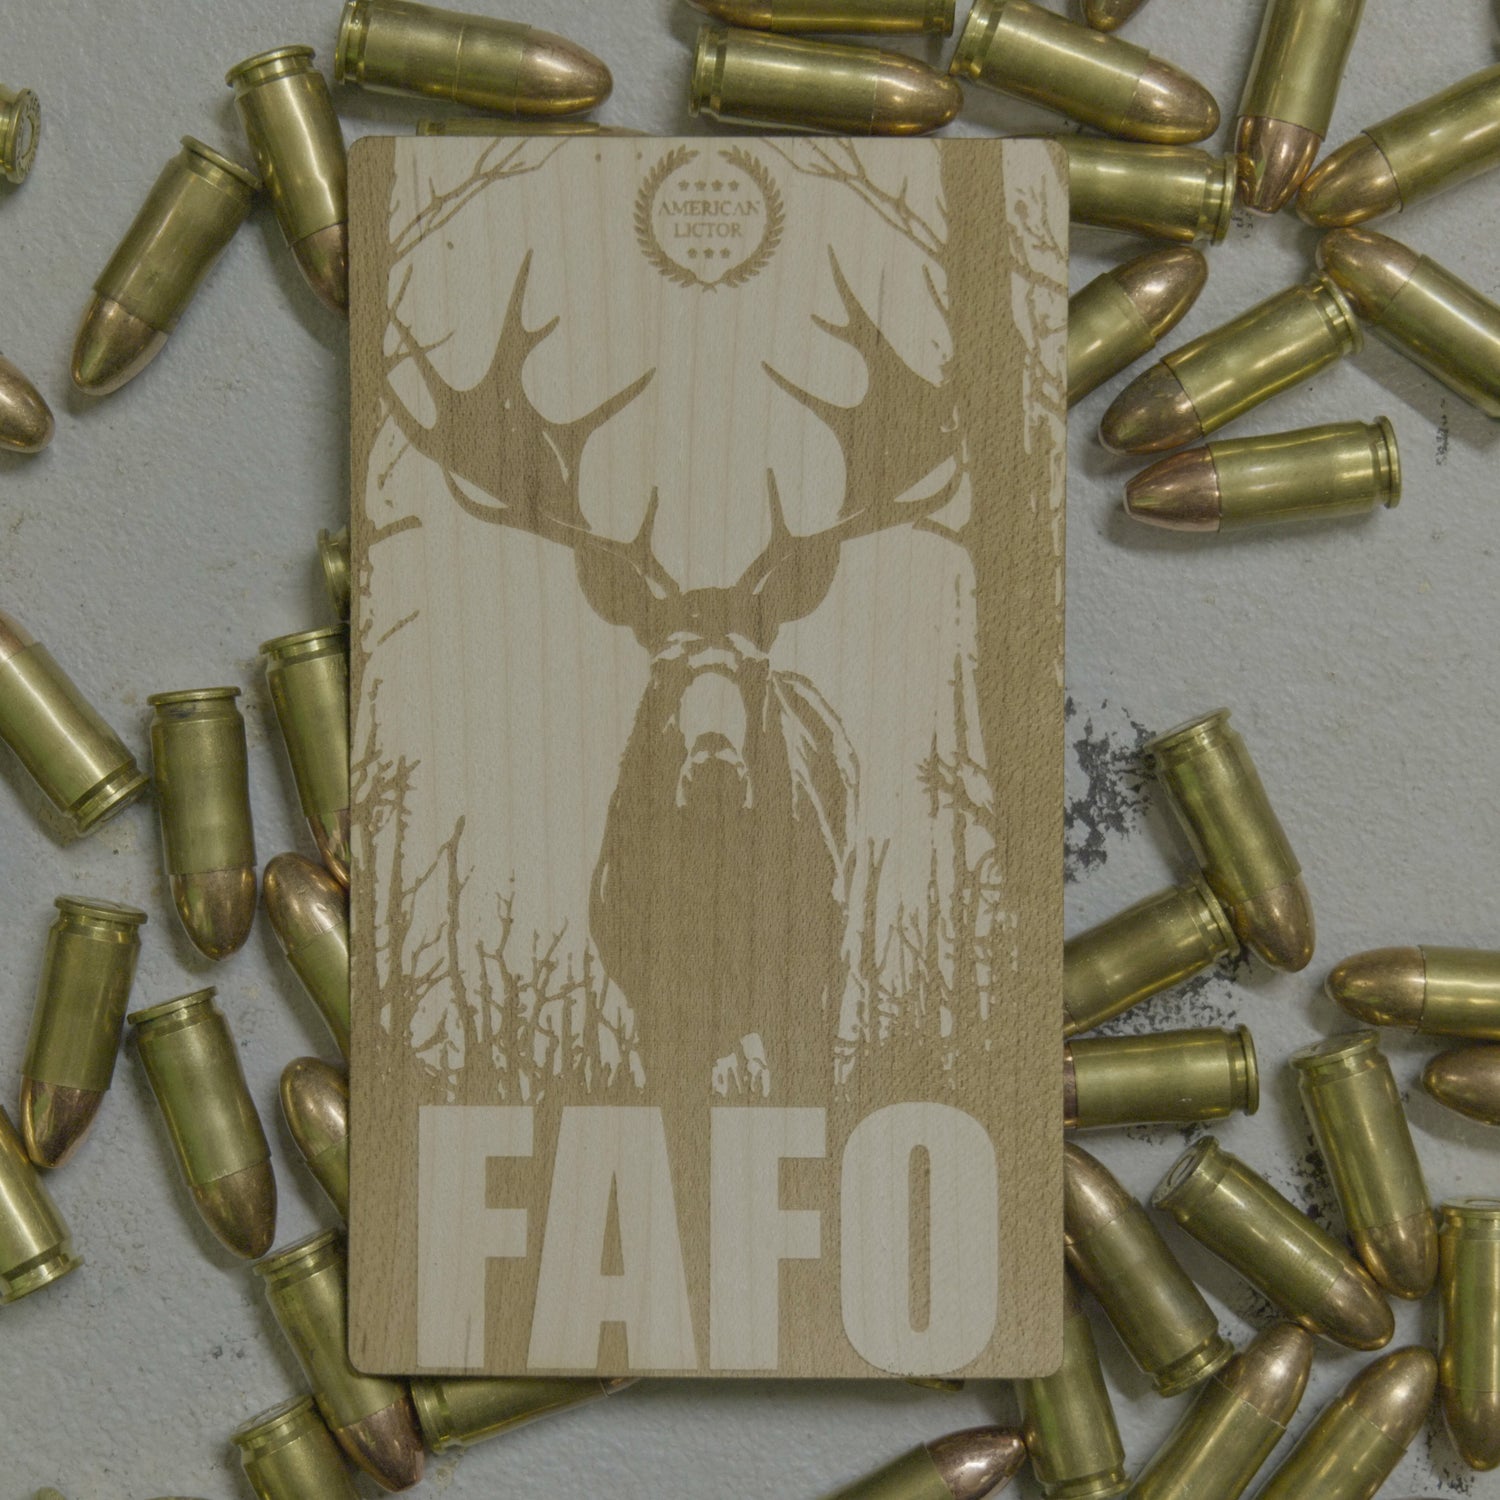 Moose the FAFO Patriotic Sticker